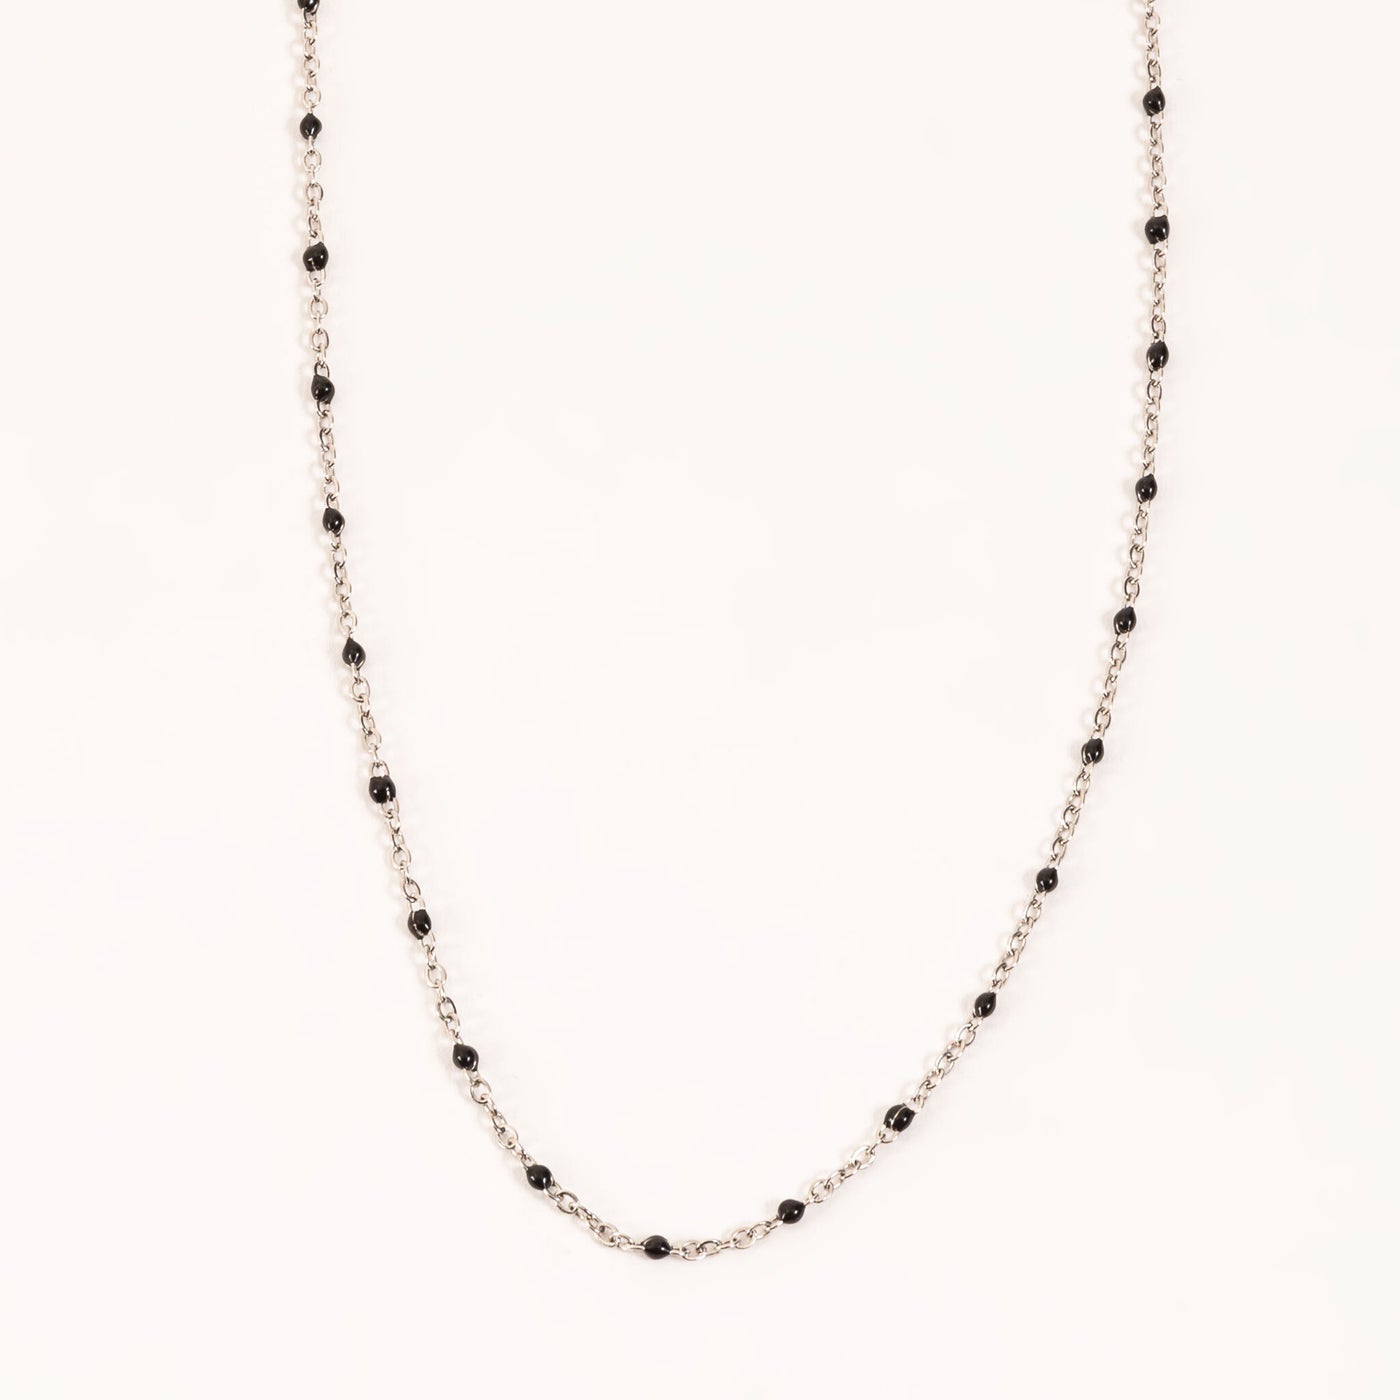 Gold Beaded Necklace | 14-karat 16 inch